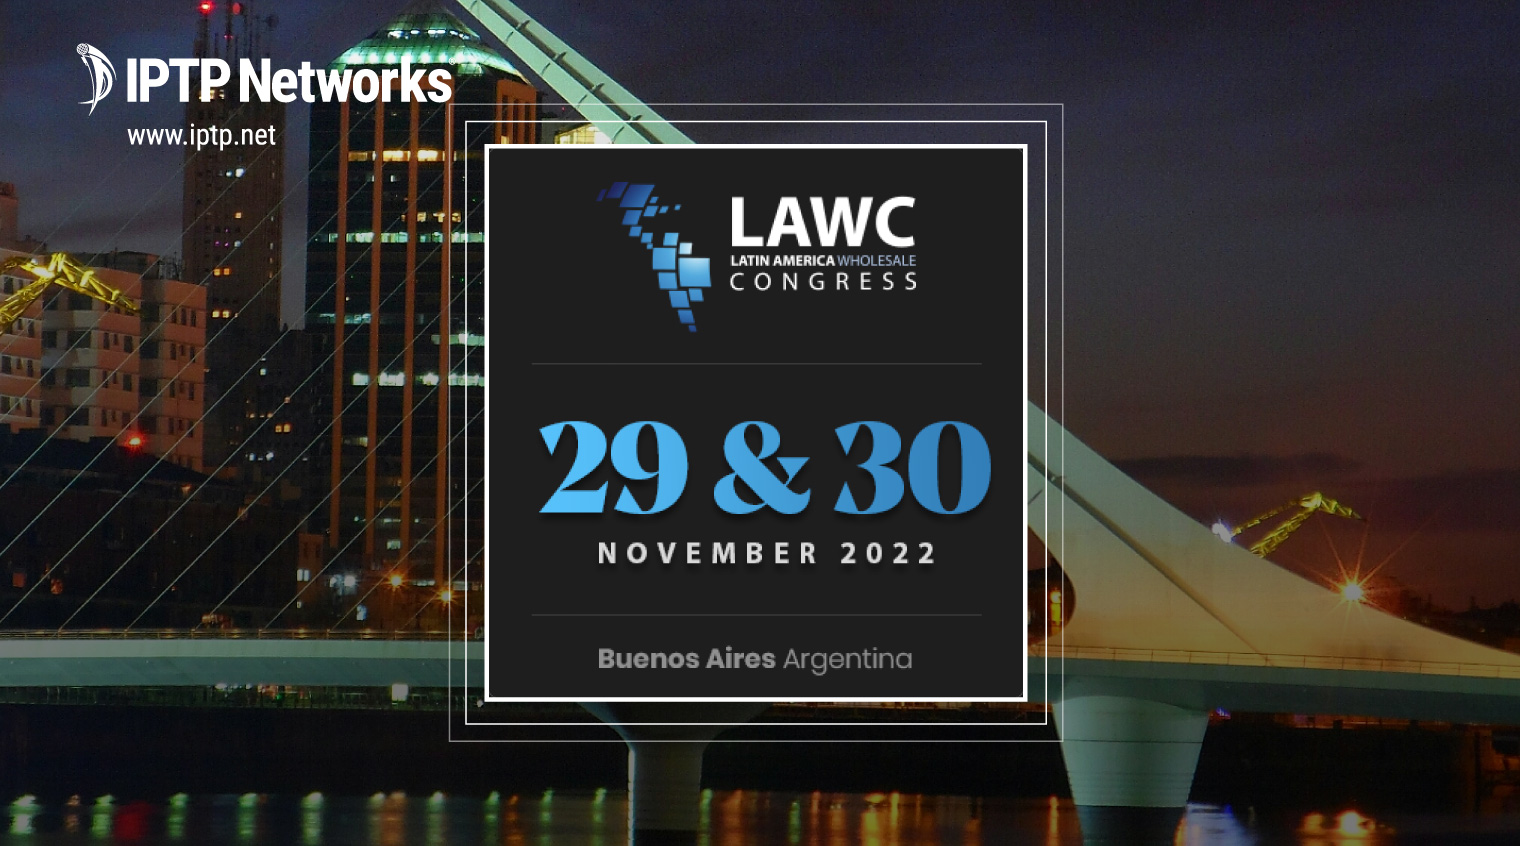 Latin America Wholesale Congress 2022